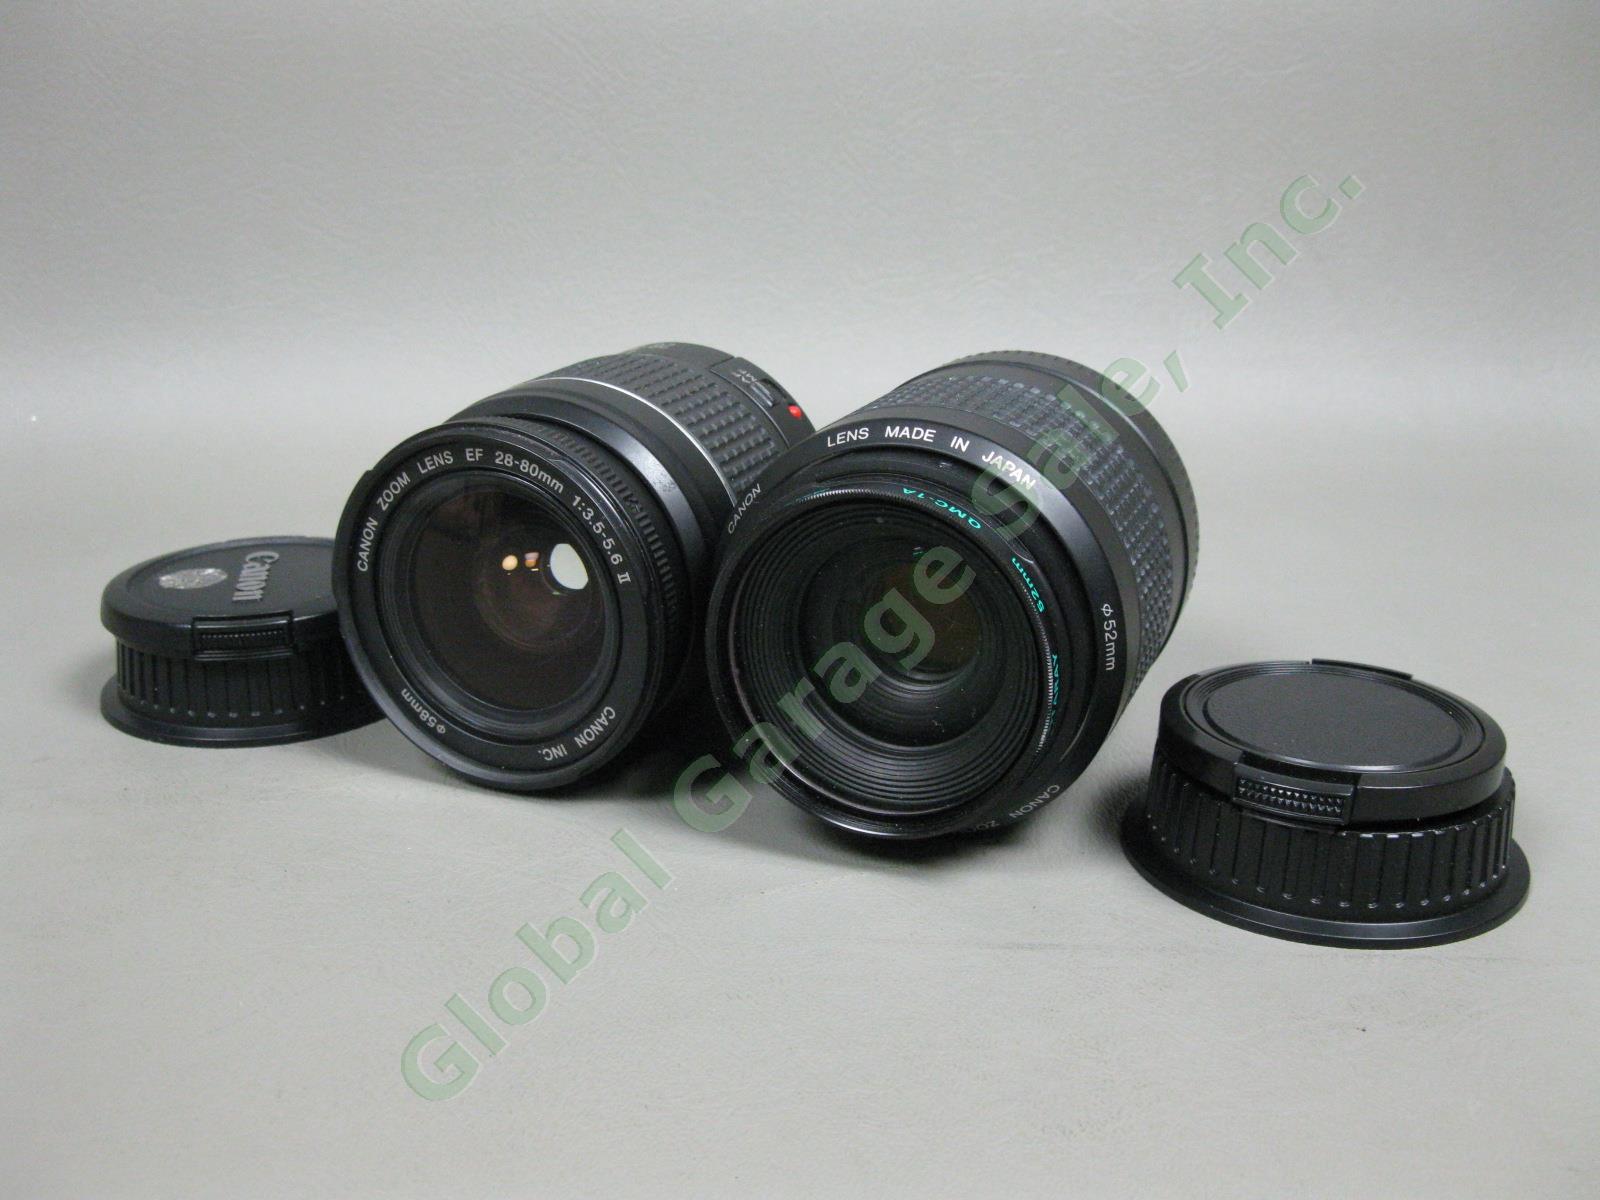 Canon EOS Rebel T3 SLR Camera Lot 80/200mm Lens Portable Tripod Eddie Bauer Bag 6